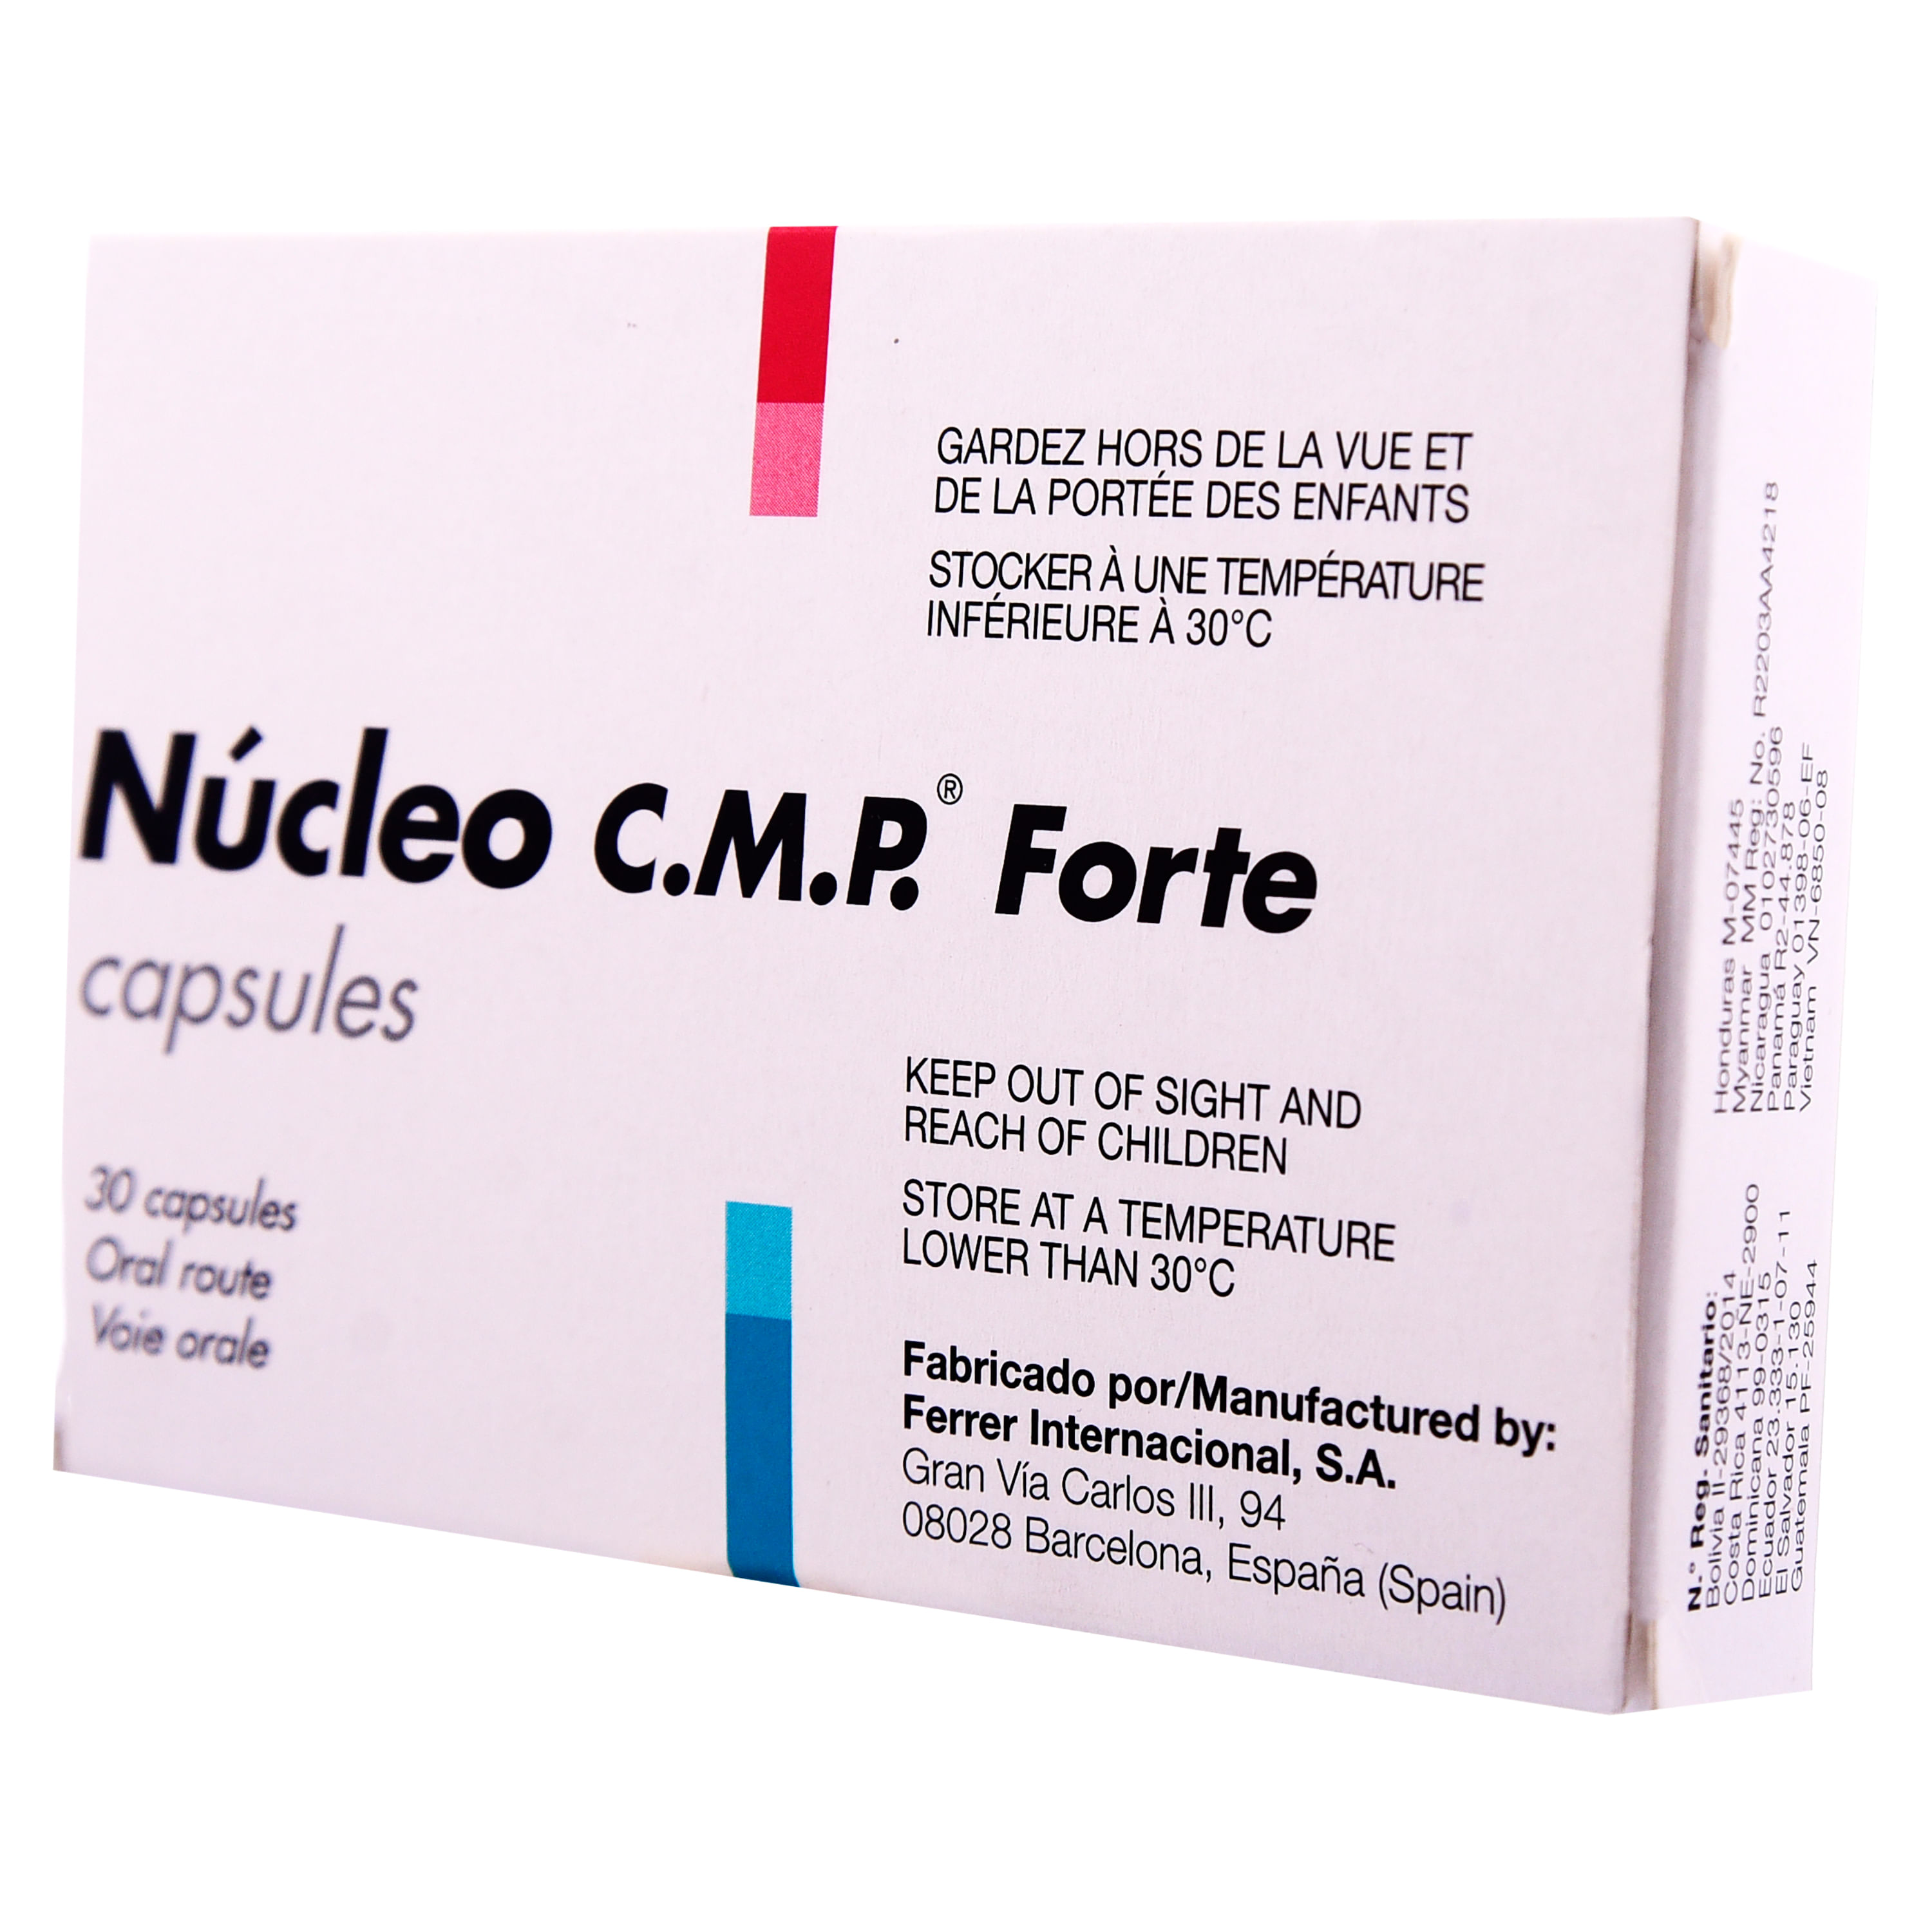 Comprar Nucleo Cmp Forte 30 Capsulas | Walmart Guatemala - Maxi ...